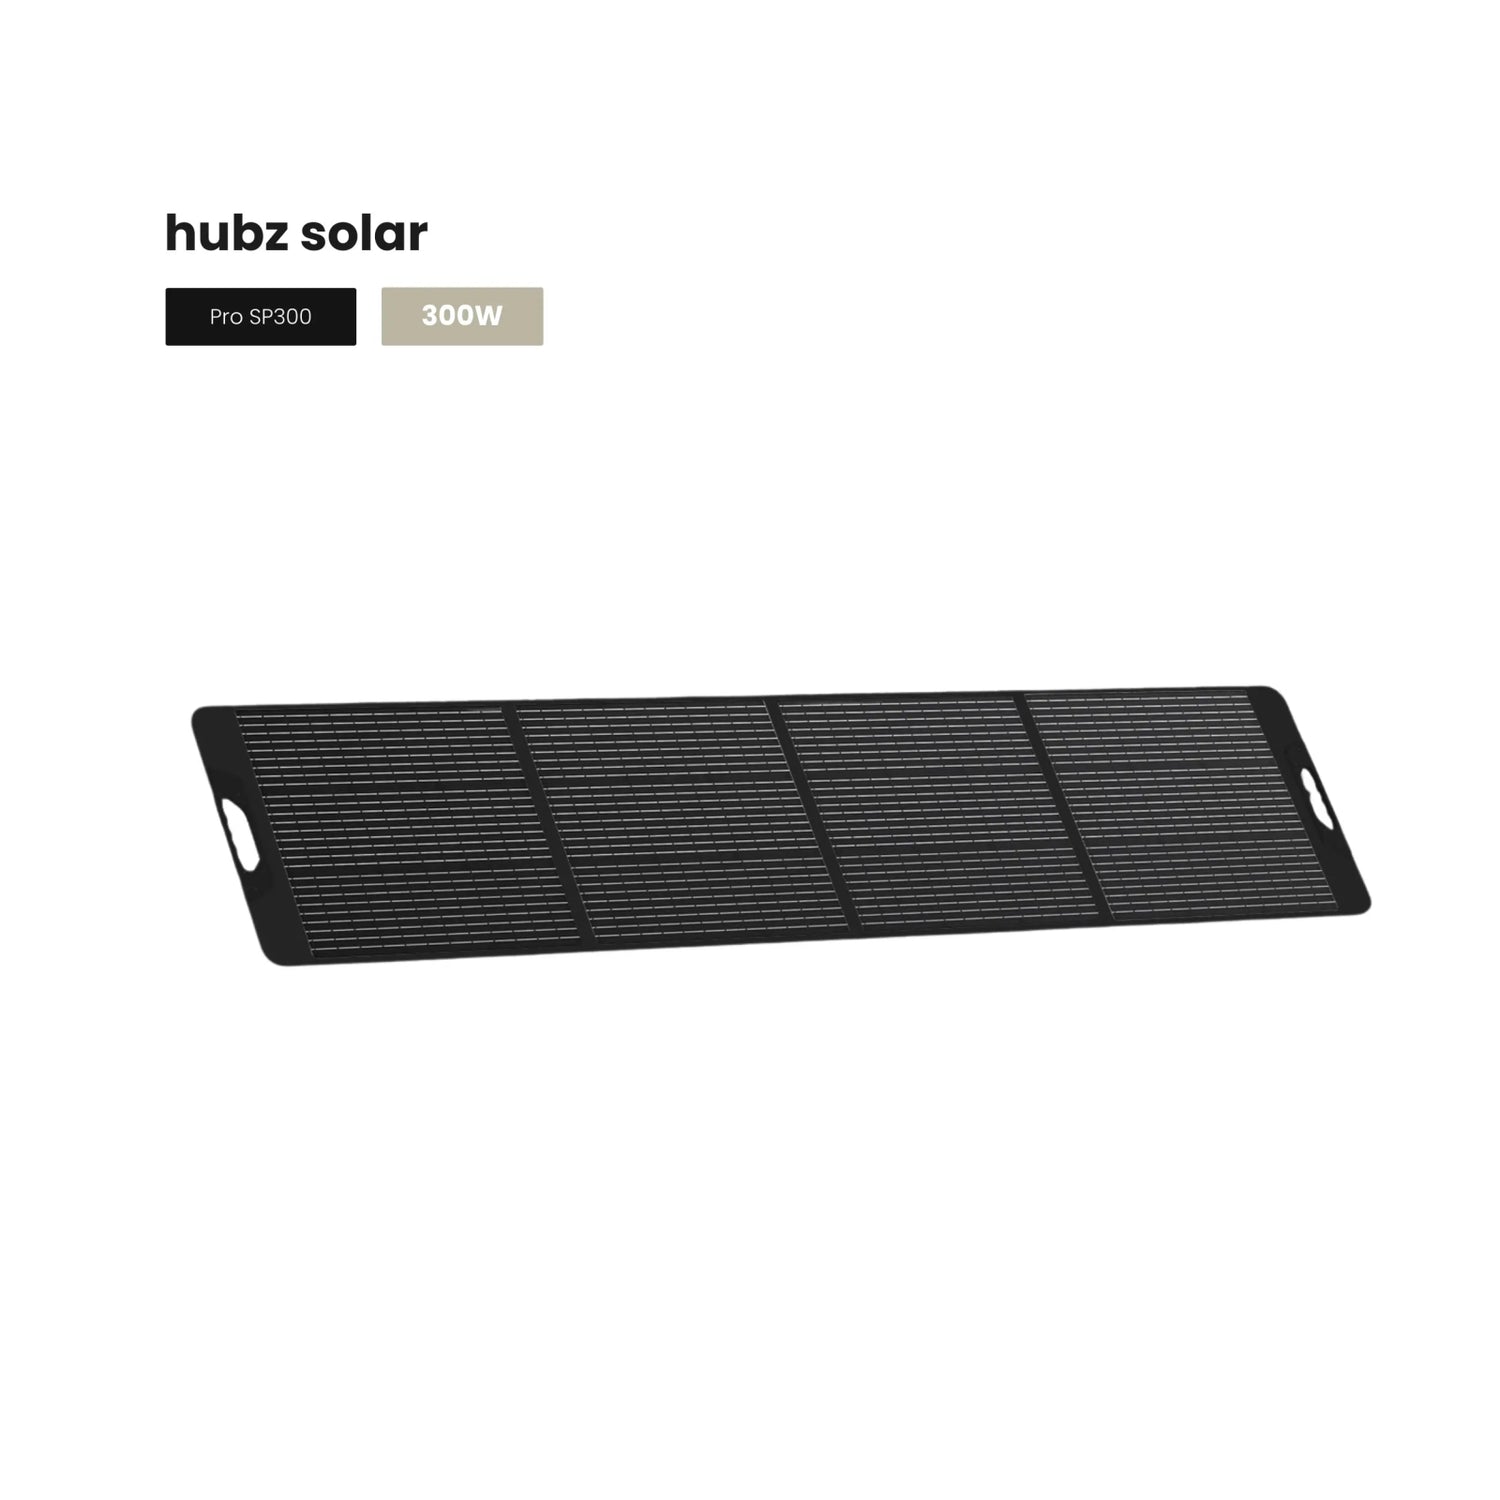 hubz 300w portable solar panel